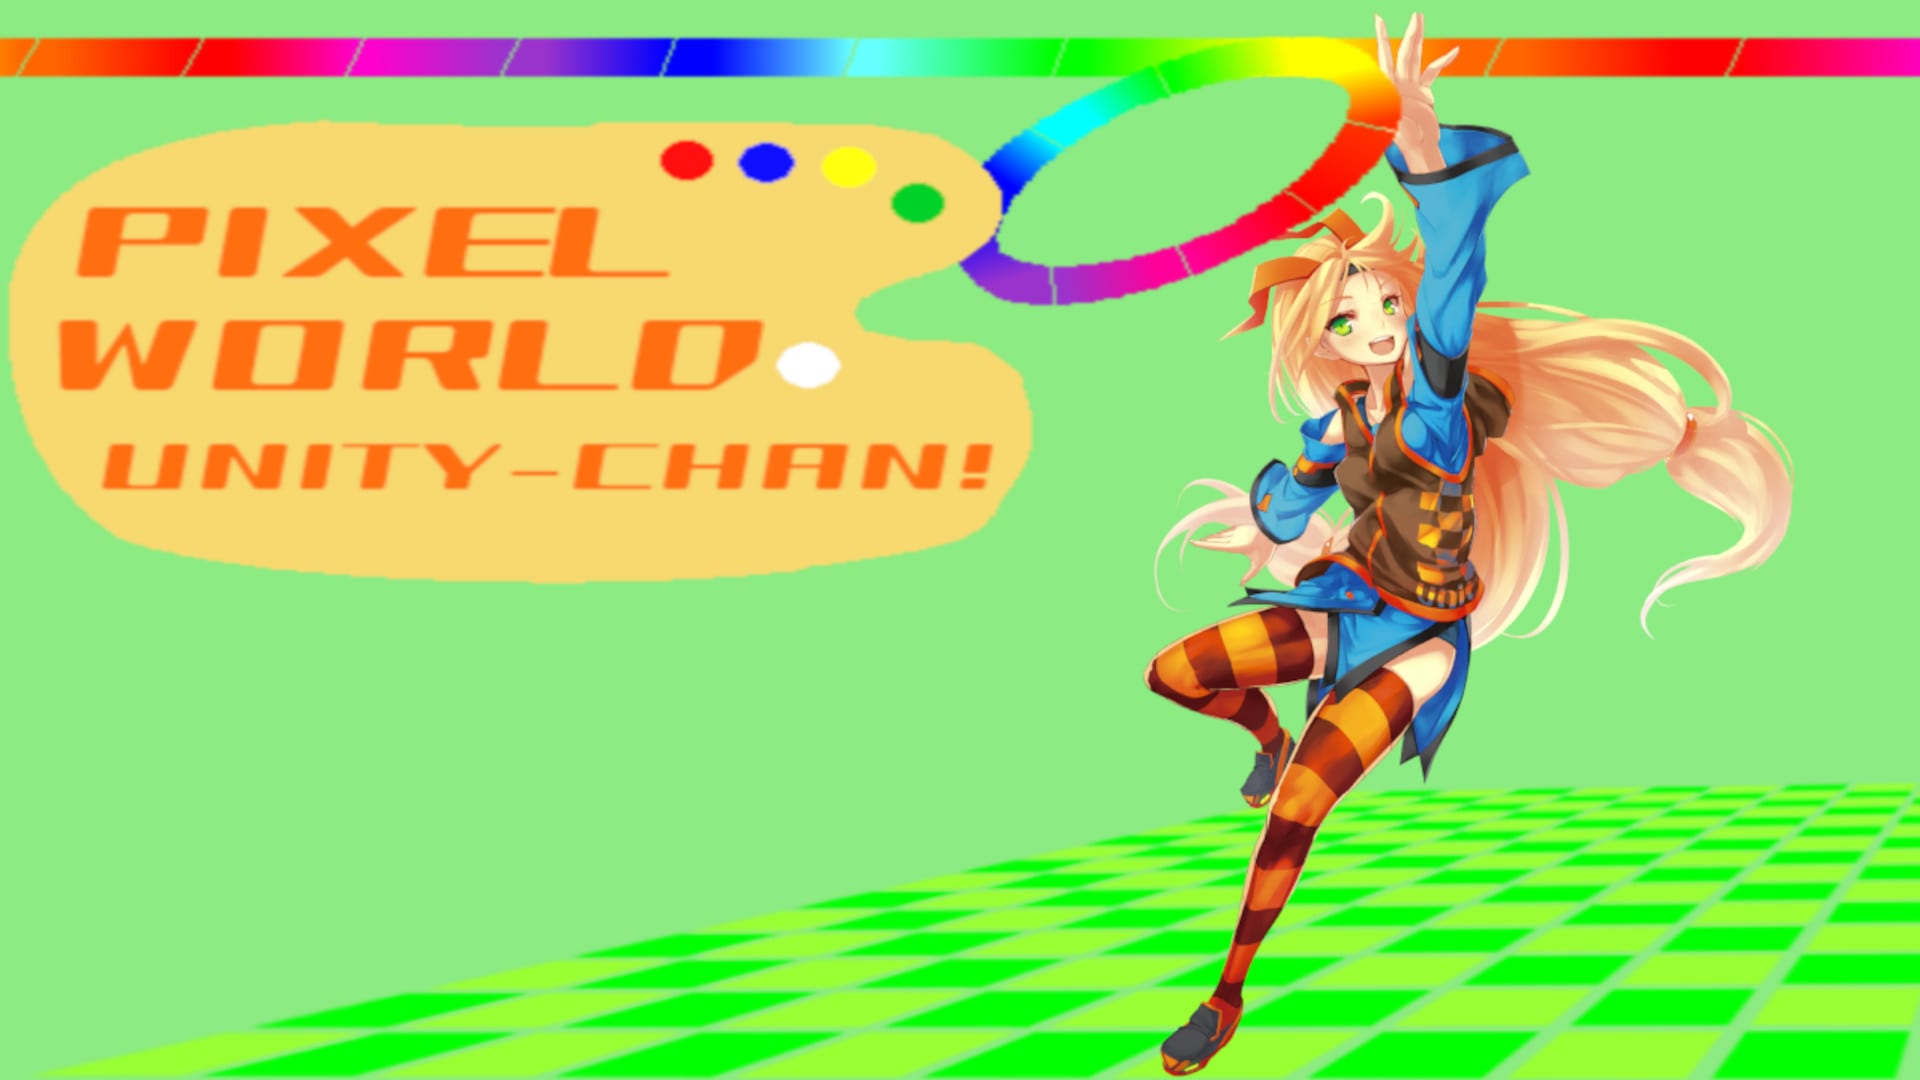 Pixel World: Unity-Chan! 1